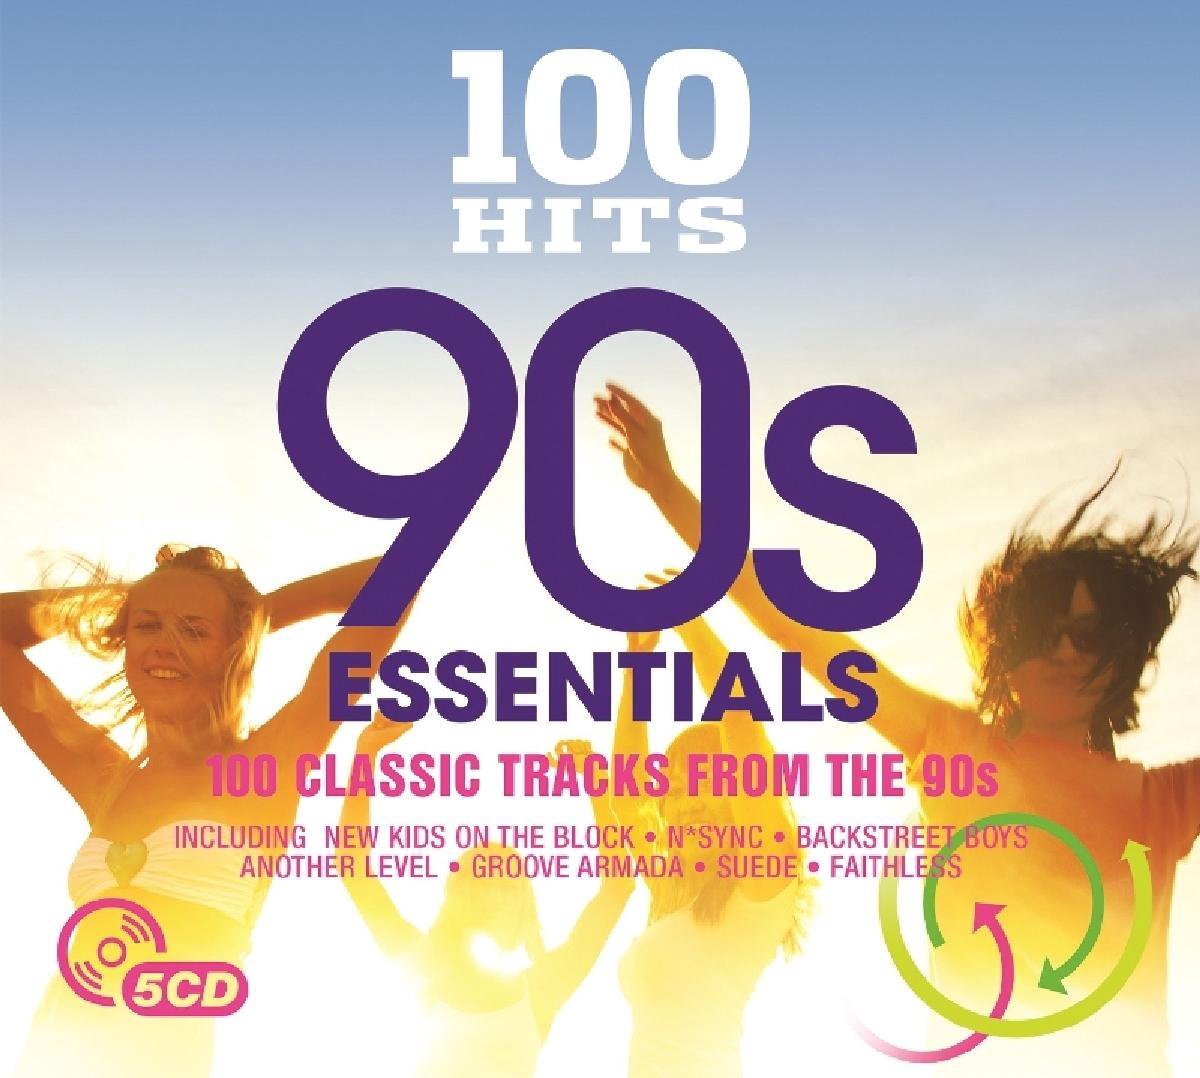 100 Hits 90s Essentials Vinyl Masterpiece